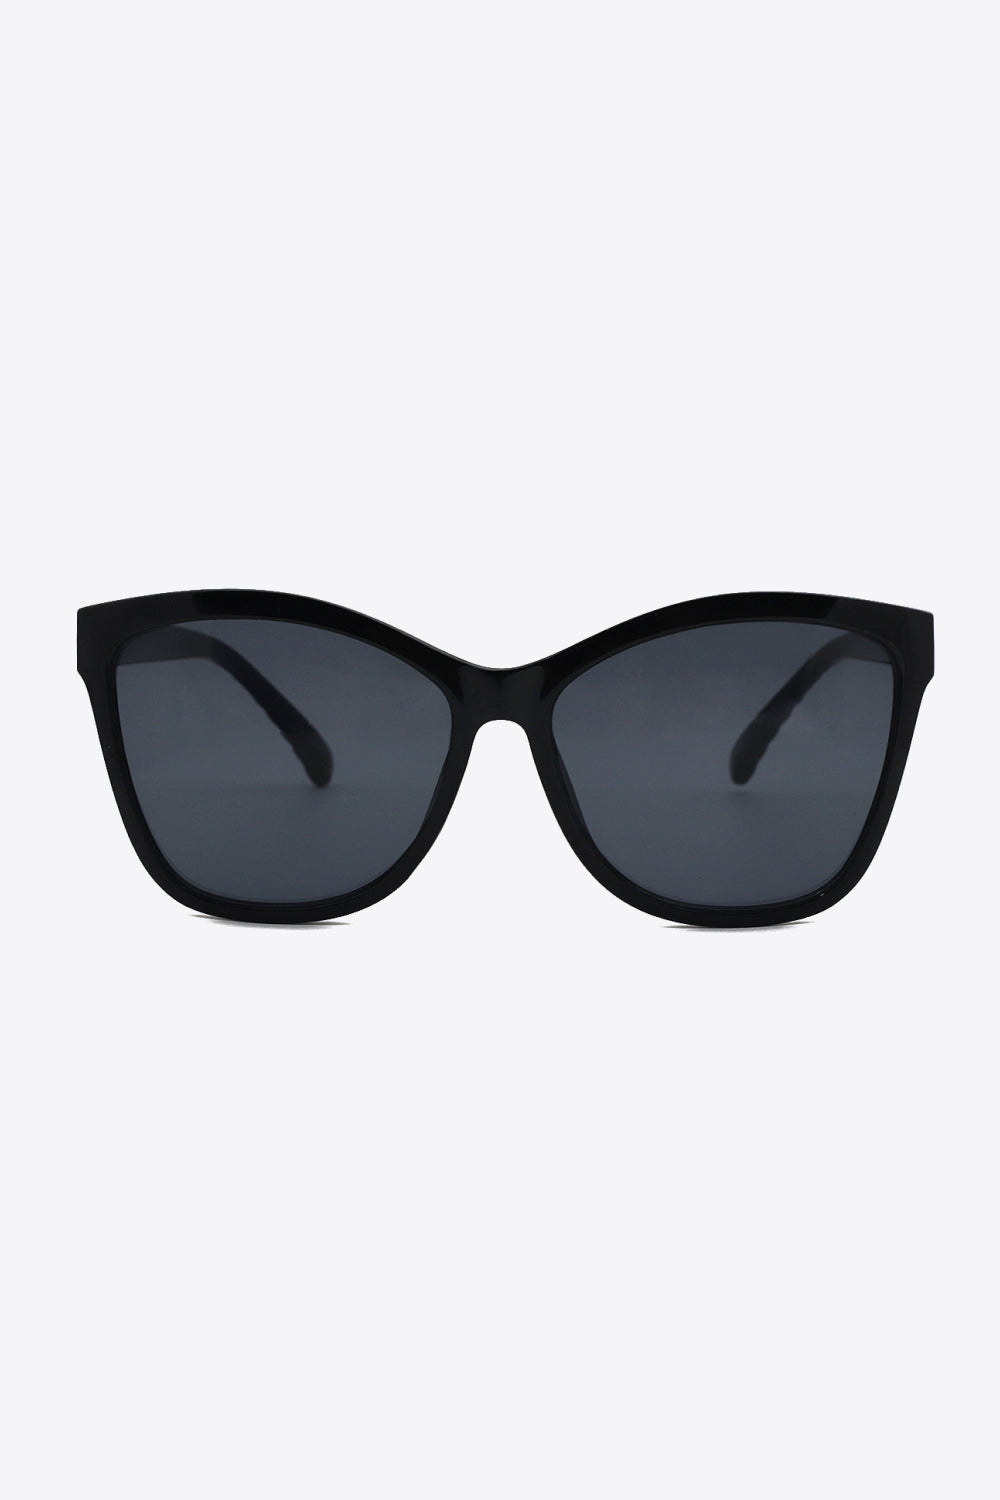 Uylee's Boutique Full Rim Polycarbonate Sunglasses